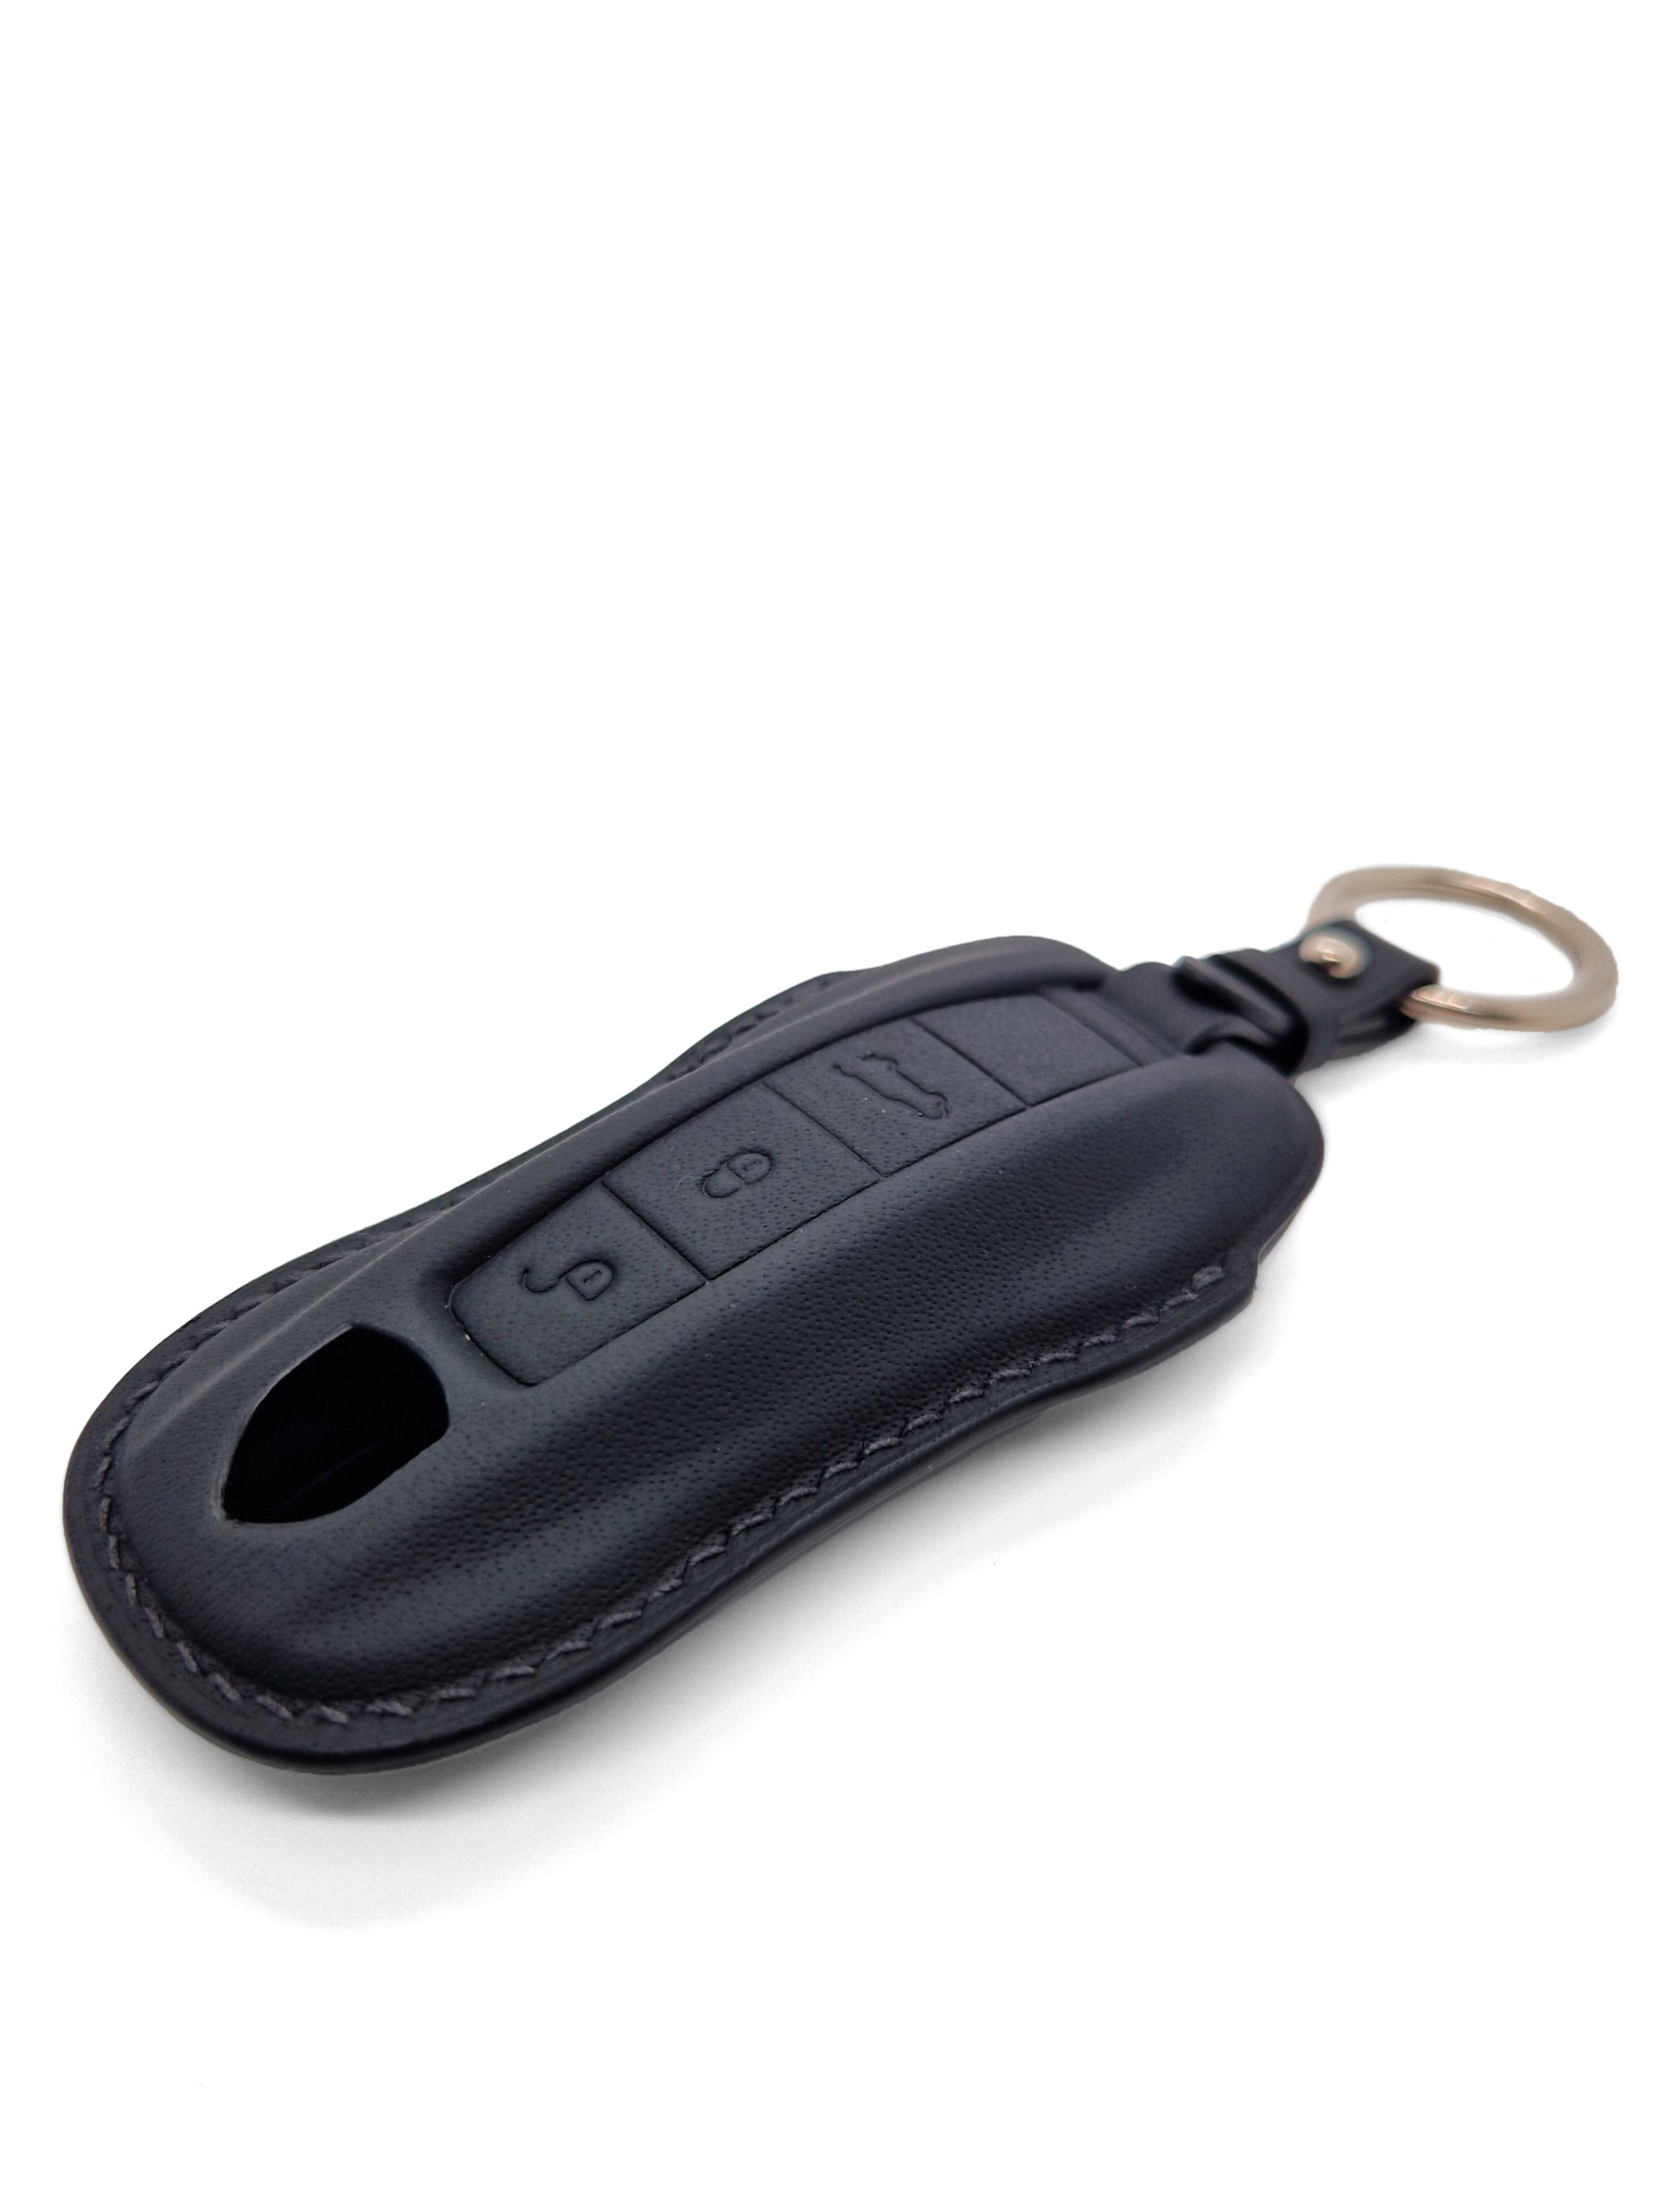 Porsche Leather Key Case